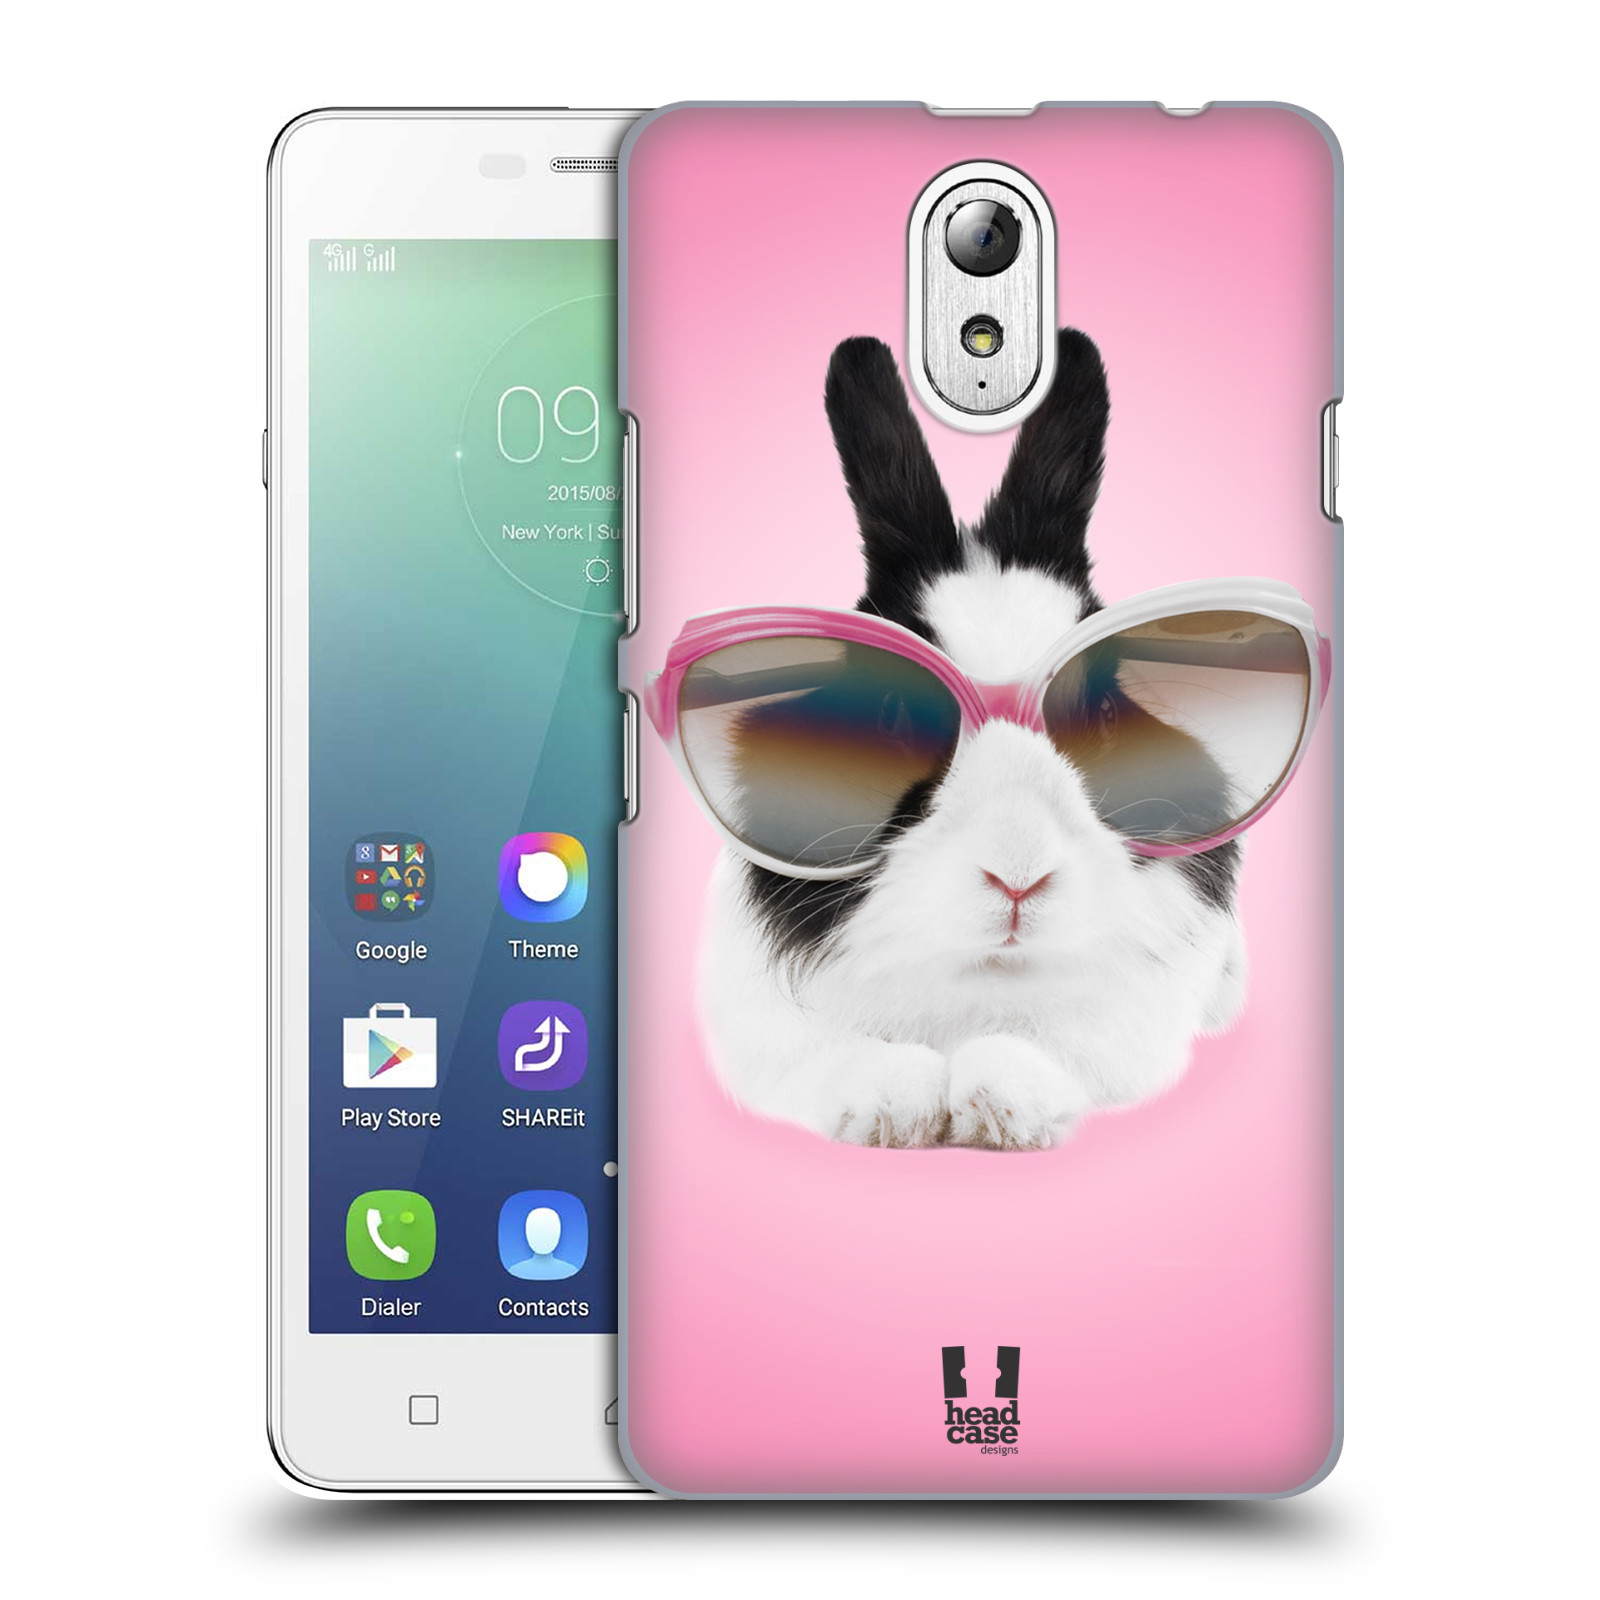 HEAD CASE pevný plastový obal na mobil LENOVO VIBE P1m / LENOVO VIBE p1m DUAL SIM vzor Legrační zvířátka roztomilý králíček s brýlemi růžová